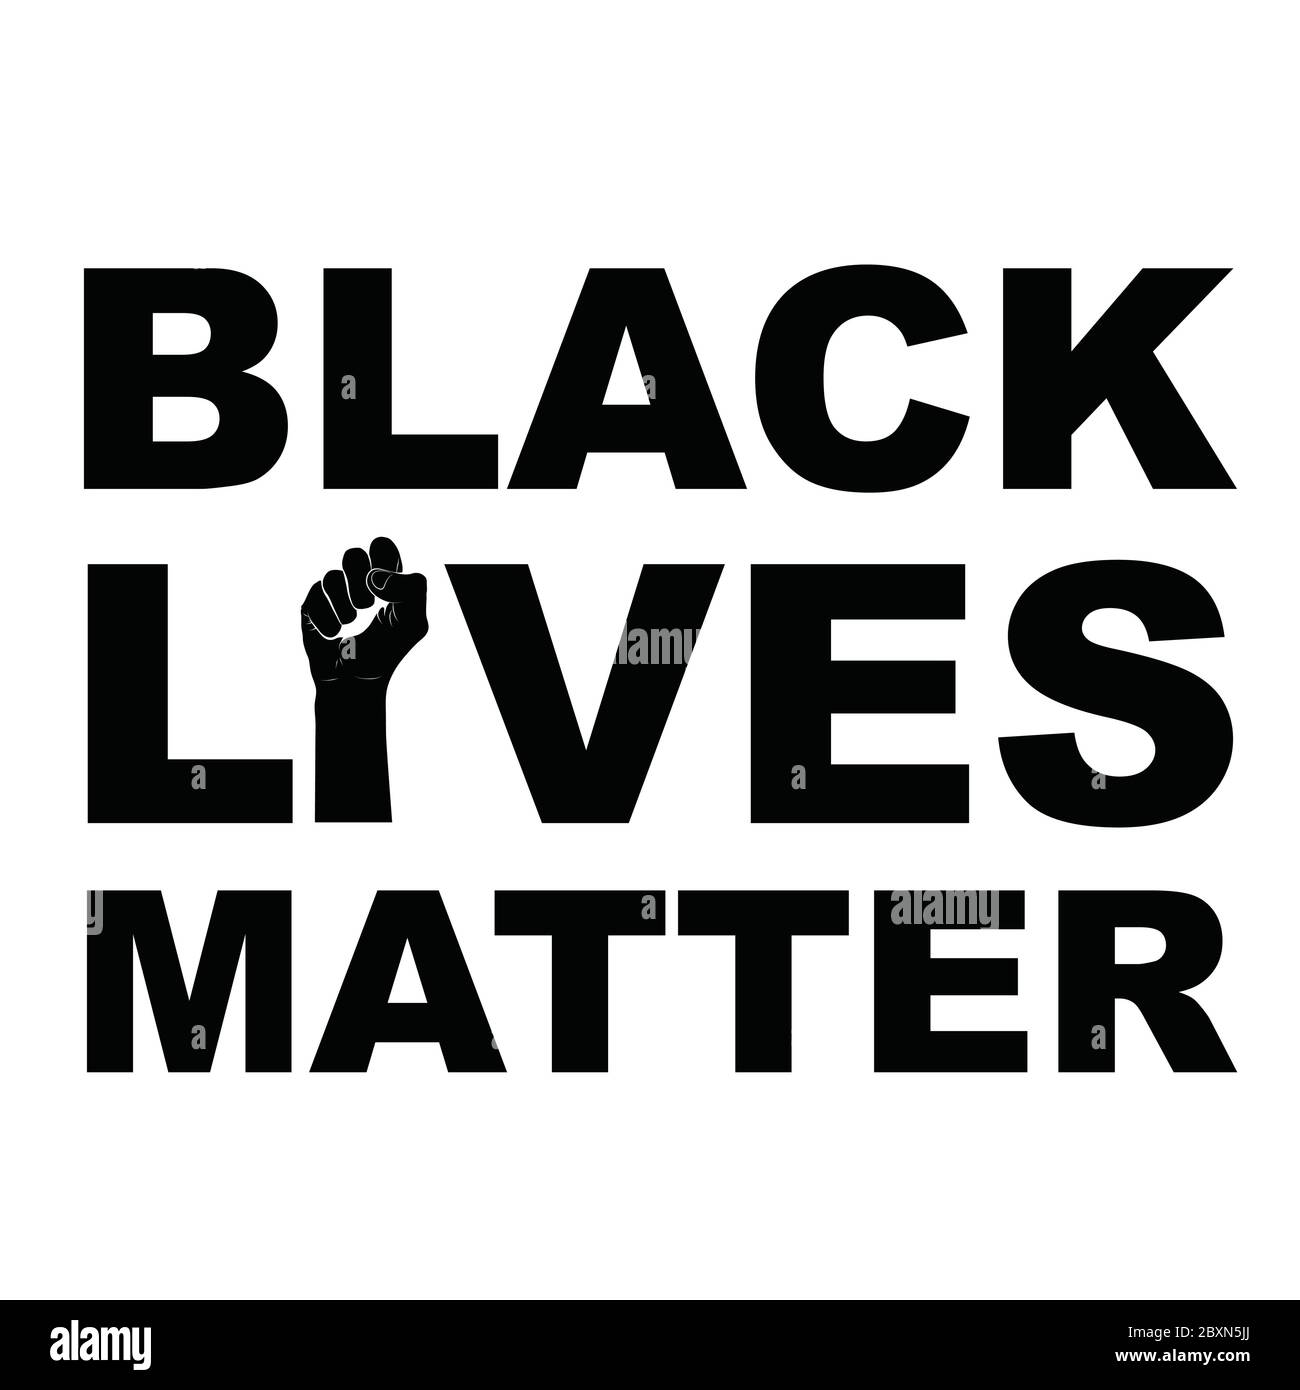 Black lives matter political movement vector sign Stock Vector